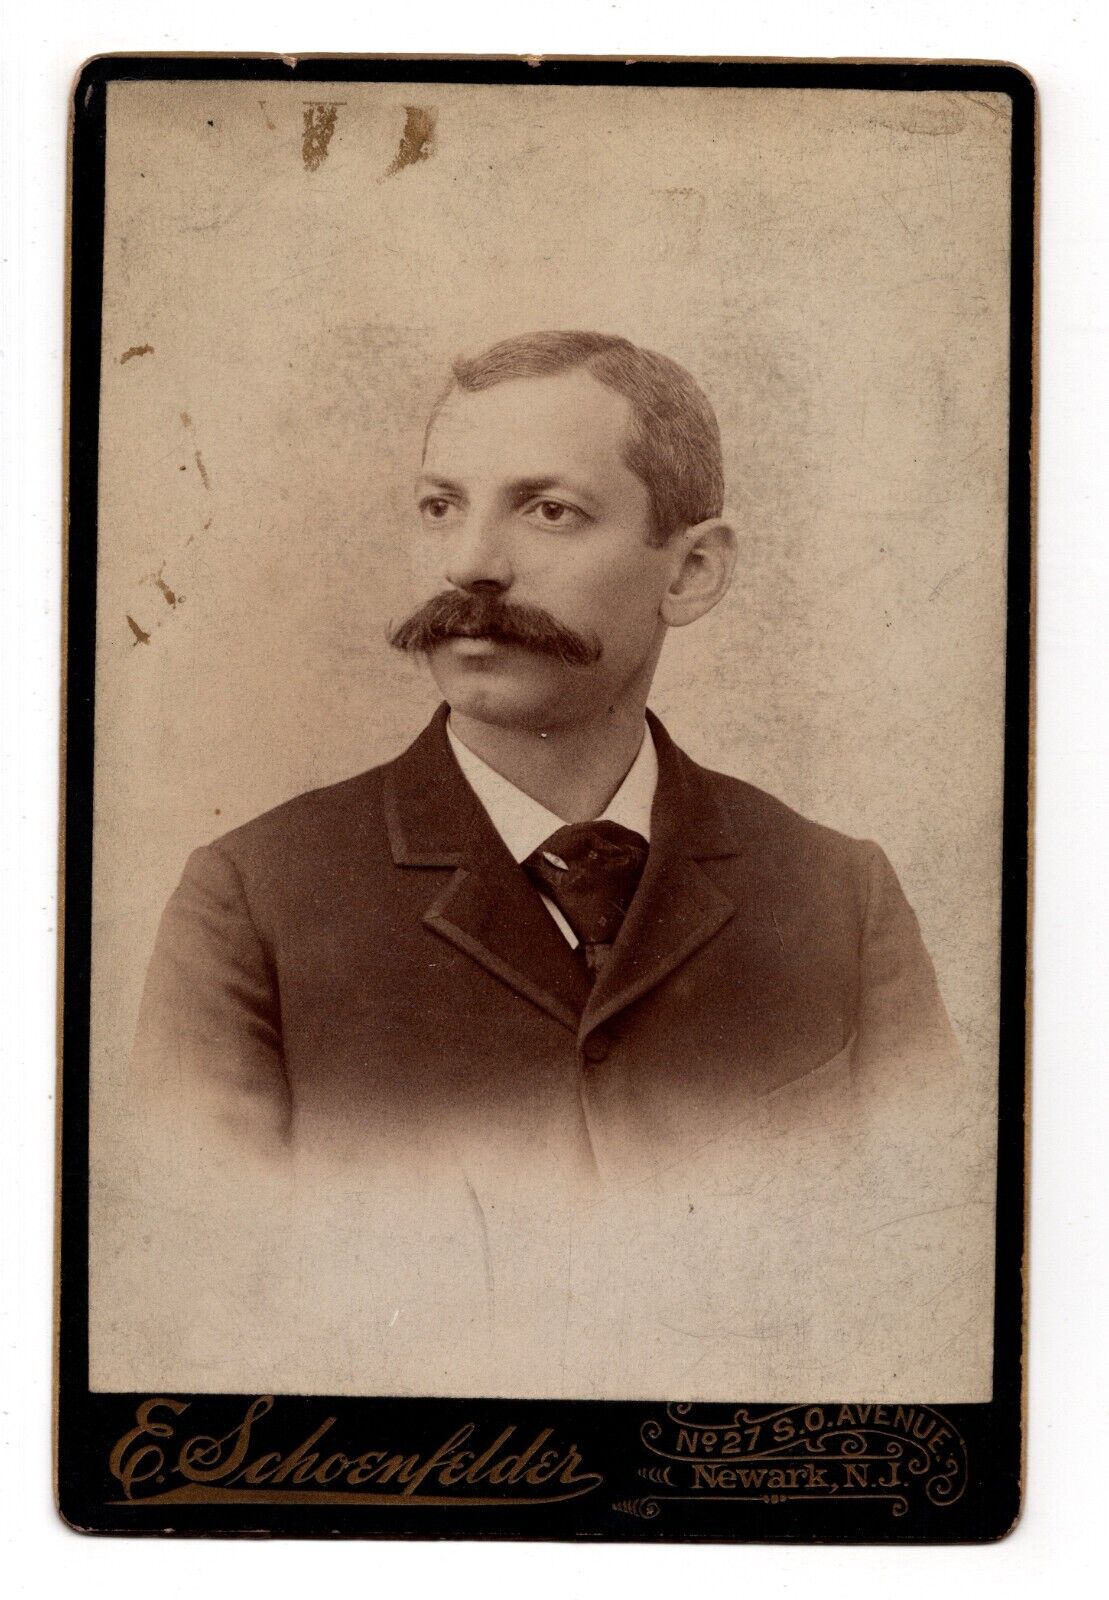 C. 1880s CABINET CARD SCHOENFELDER HANDSOME MAN WITH MUSTACHE NEWARK NEW JERSEY